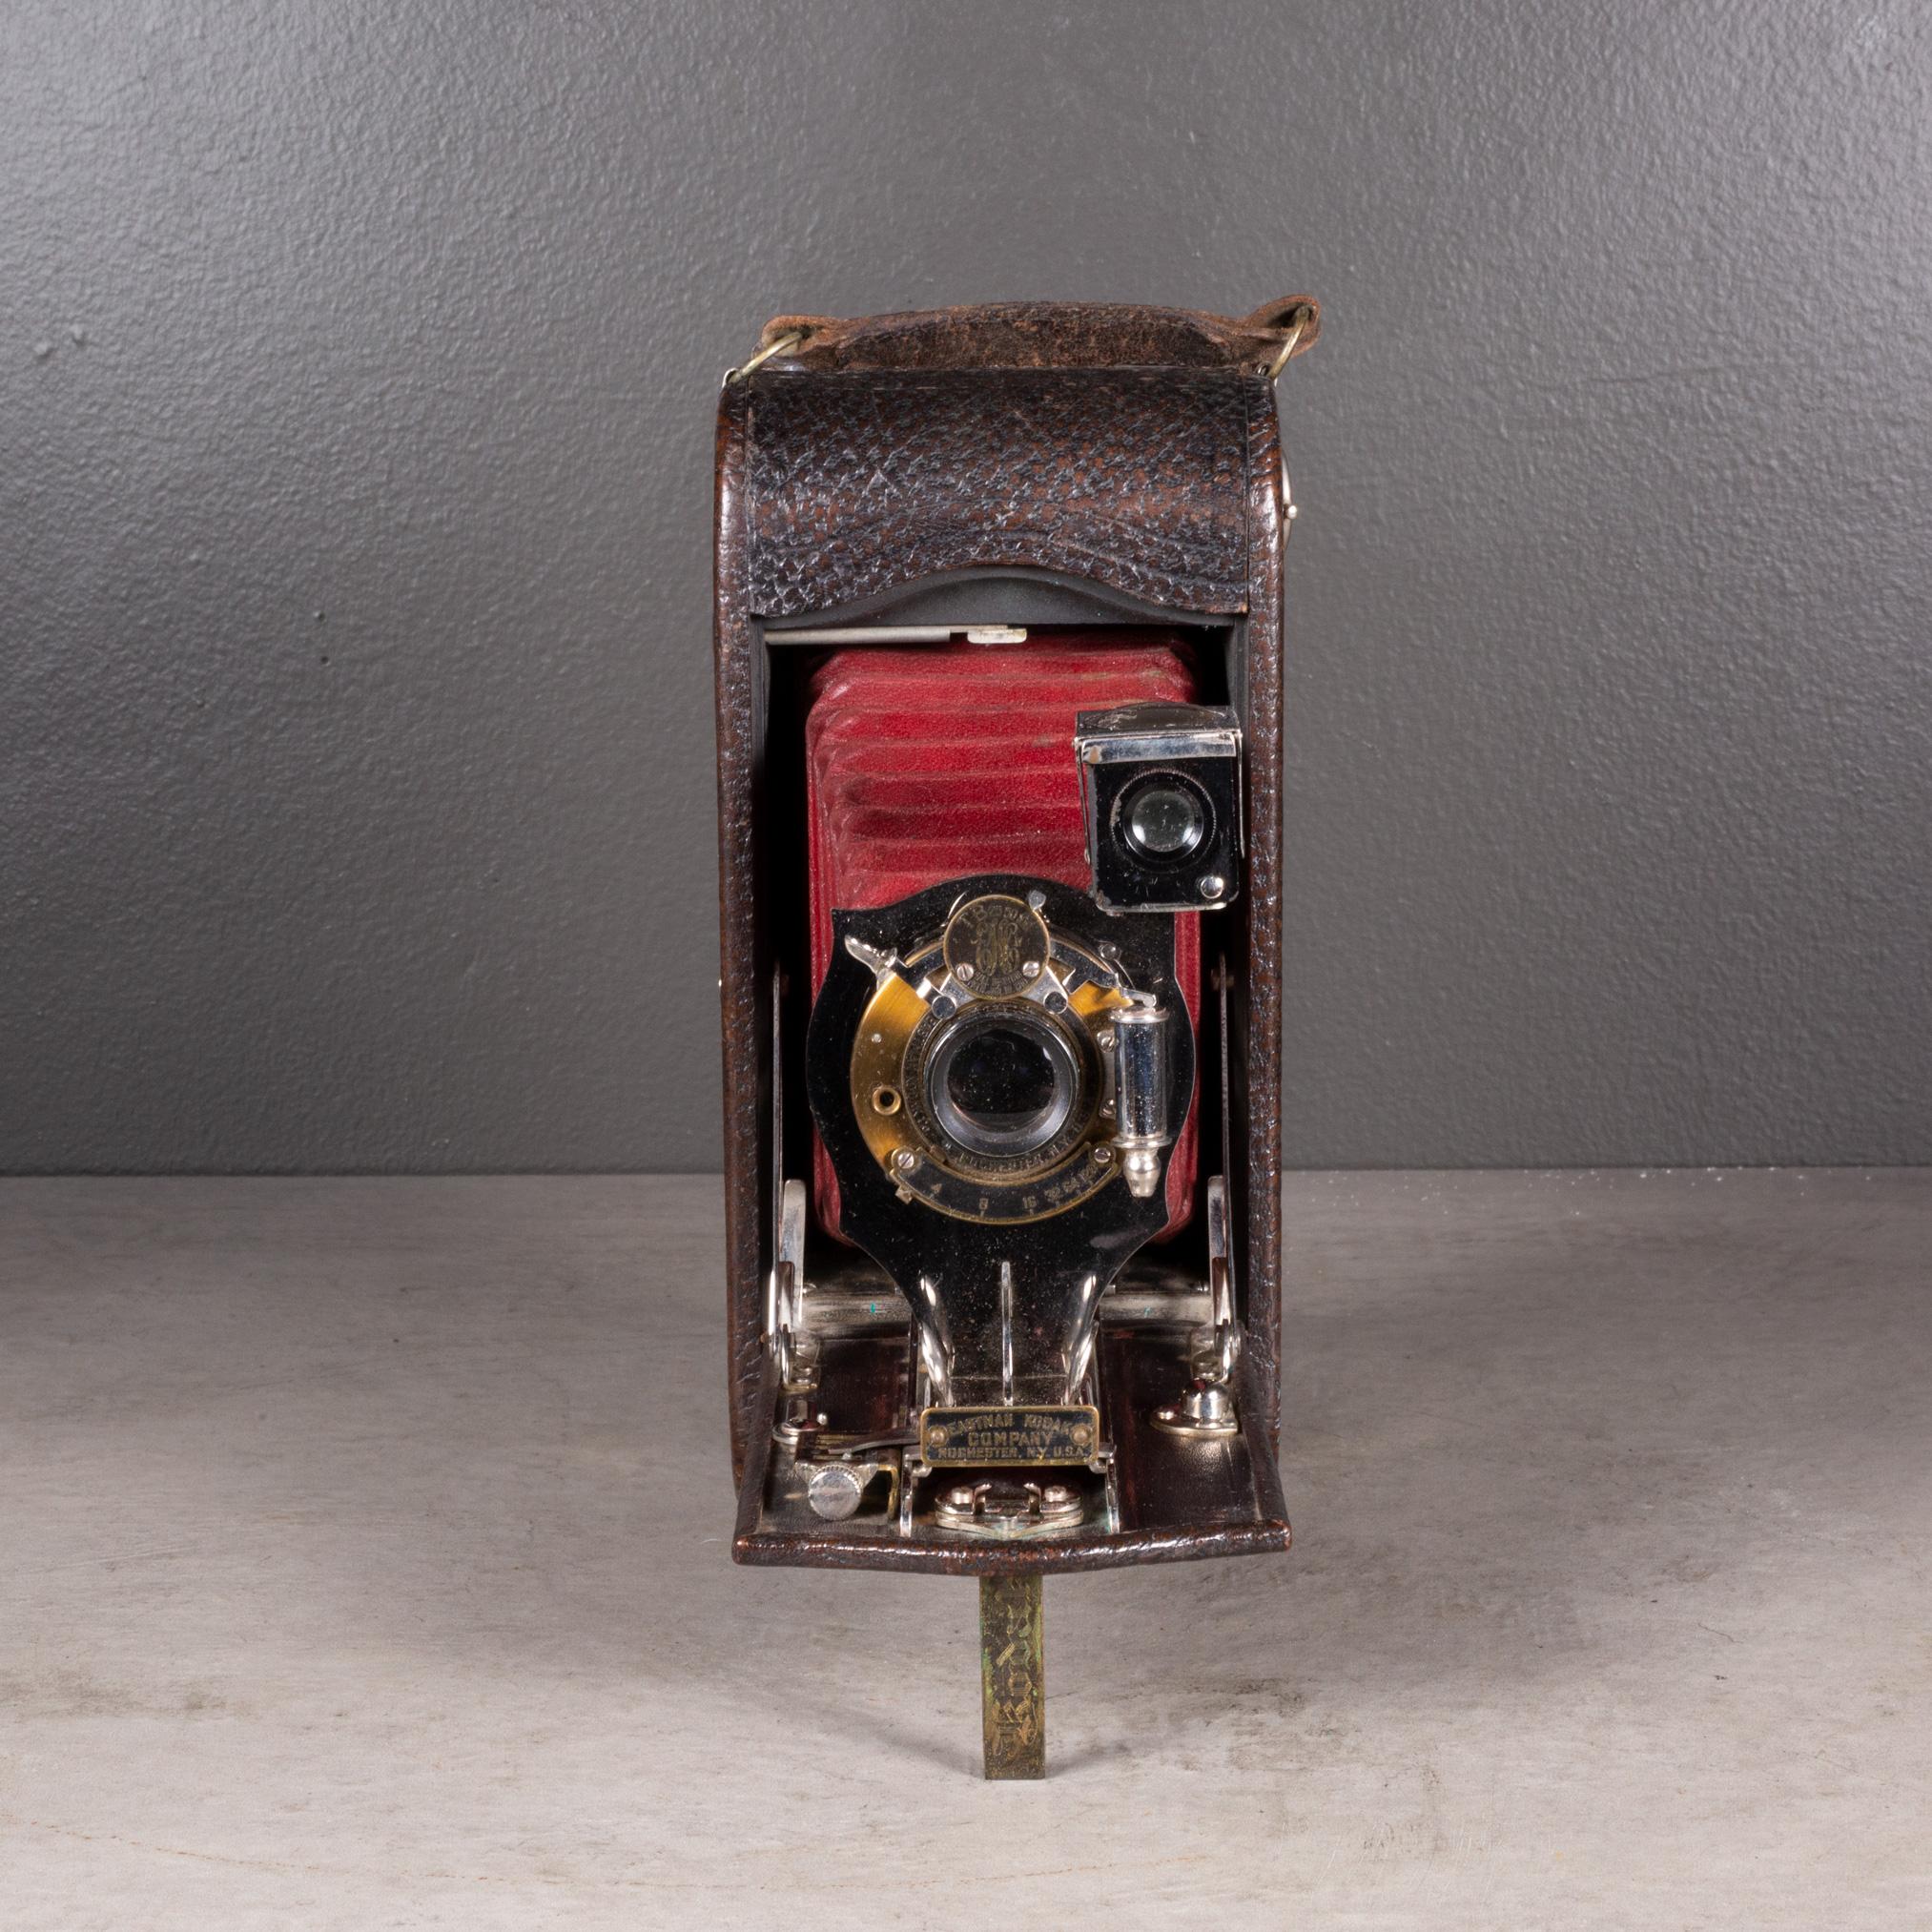 100 year old camera